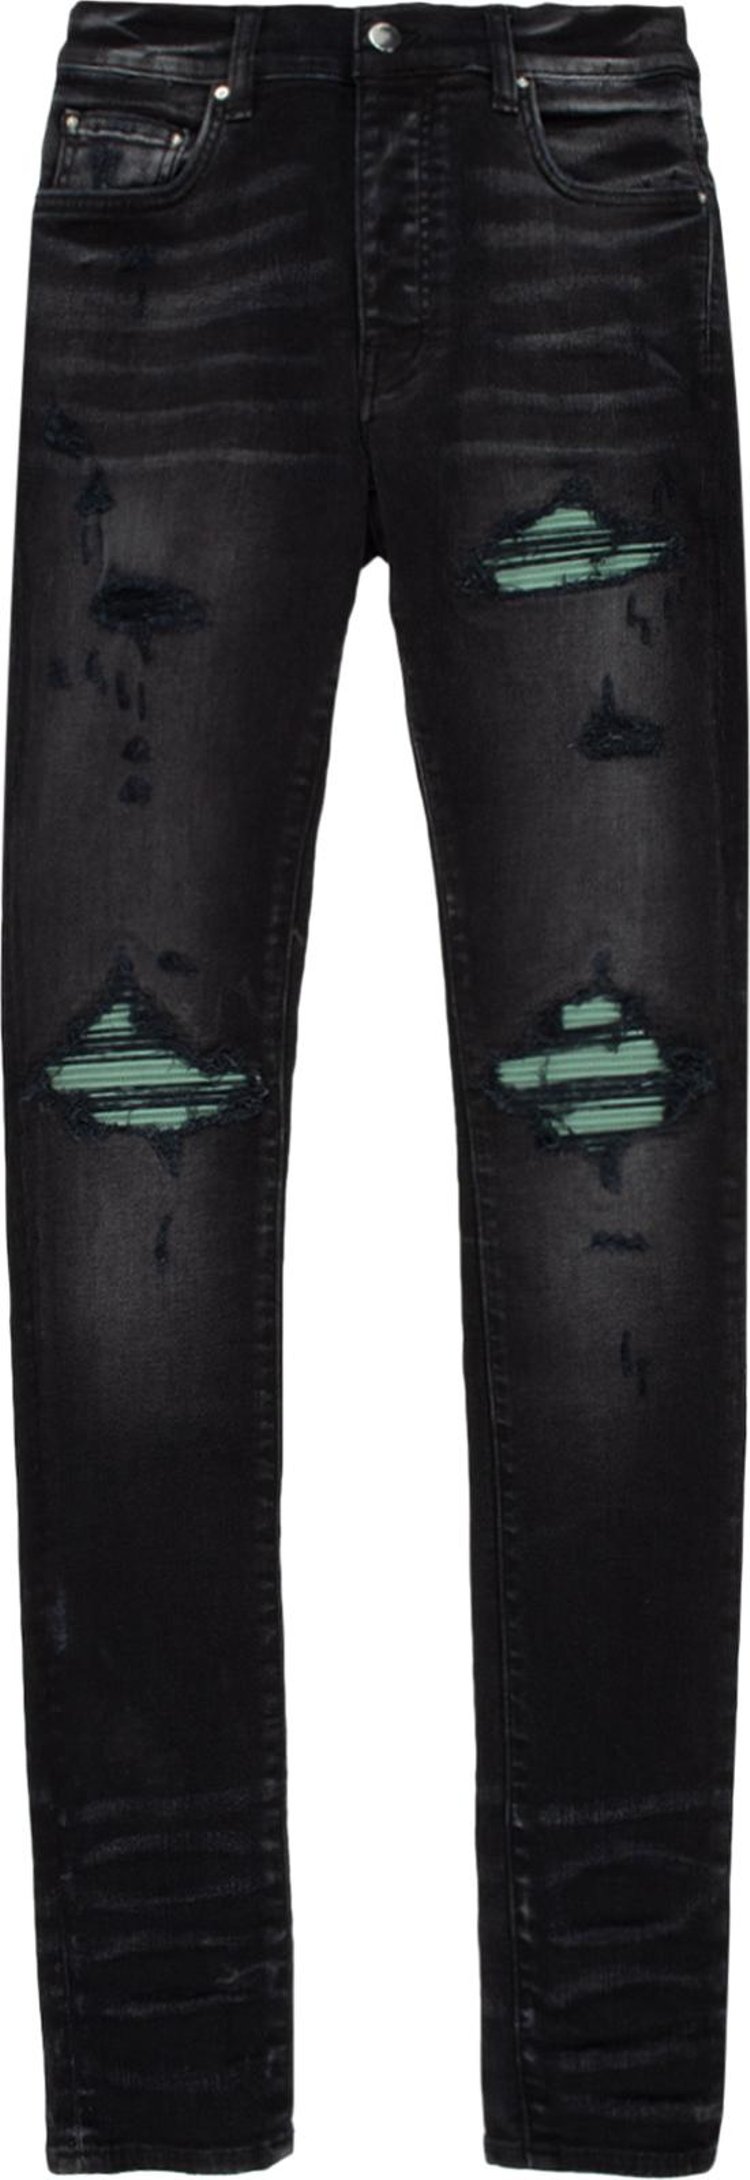 Джинсы Amiri Ultra Suede MX1 Jean 'Aged Black', черный